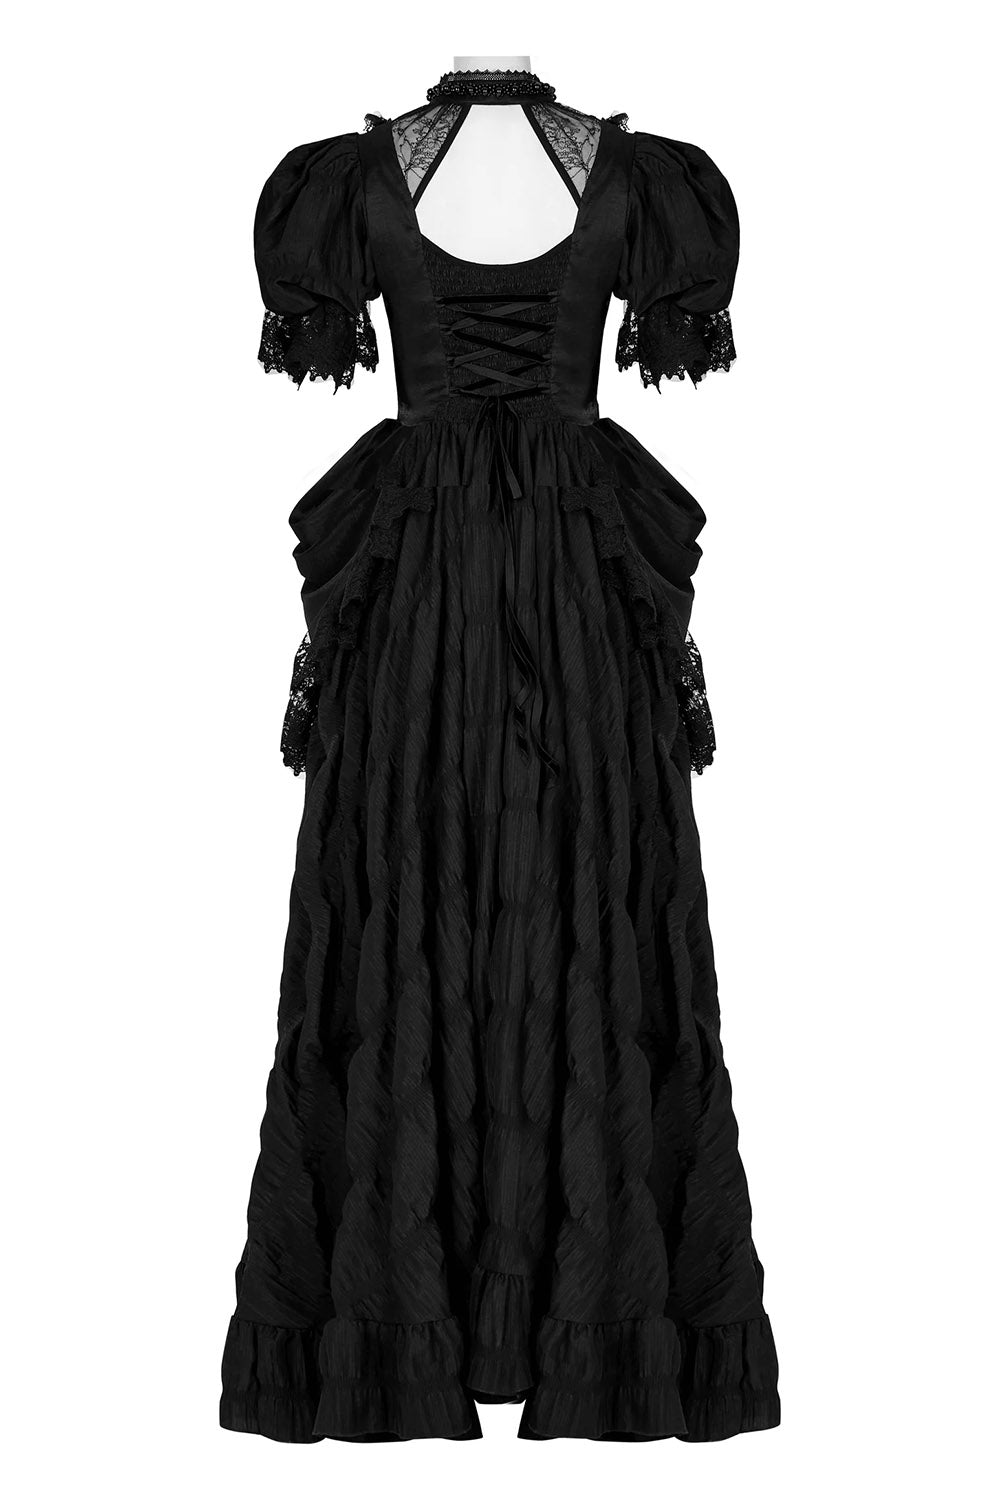 corset Victorian gothic gown